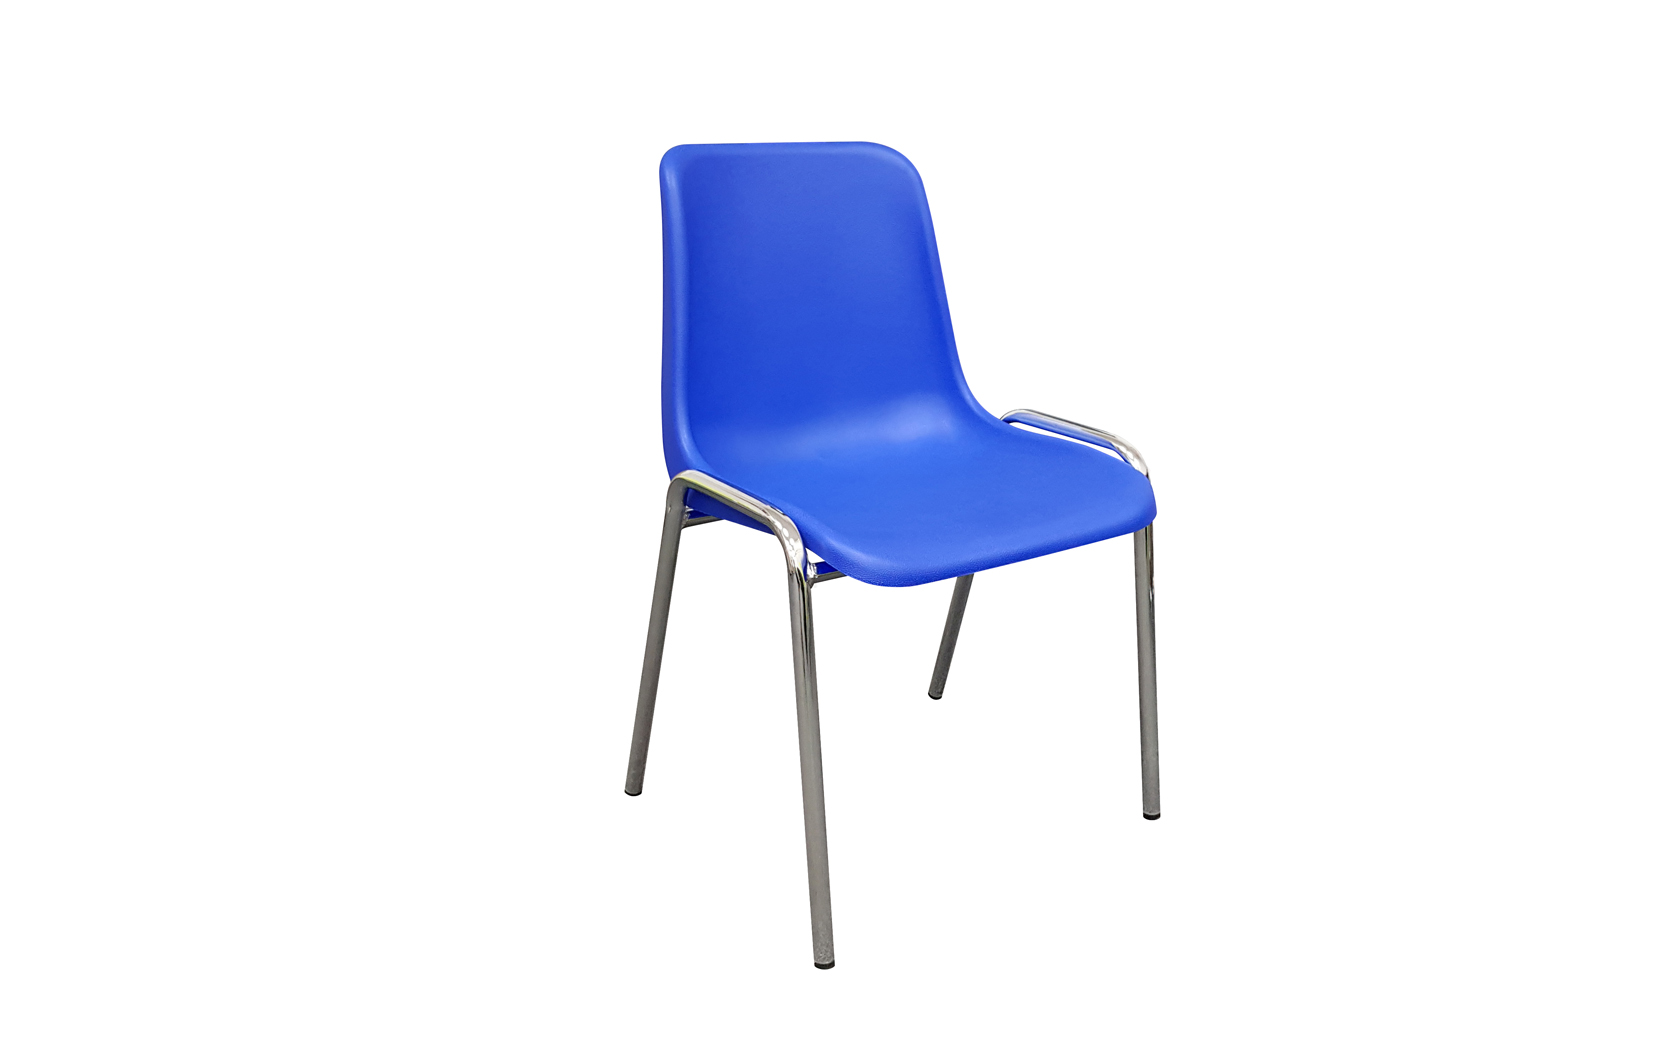 Endurance multi purpose stacking chair plastic shell chrome legs Cobalt Blue